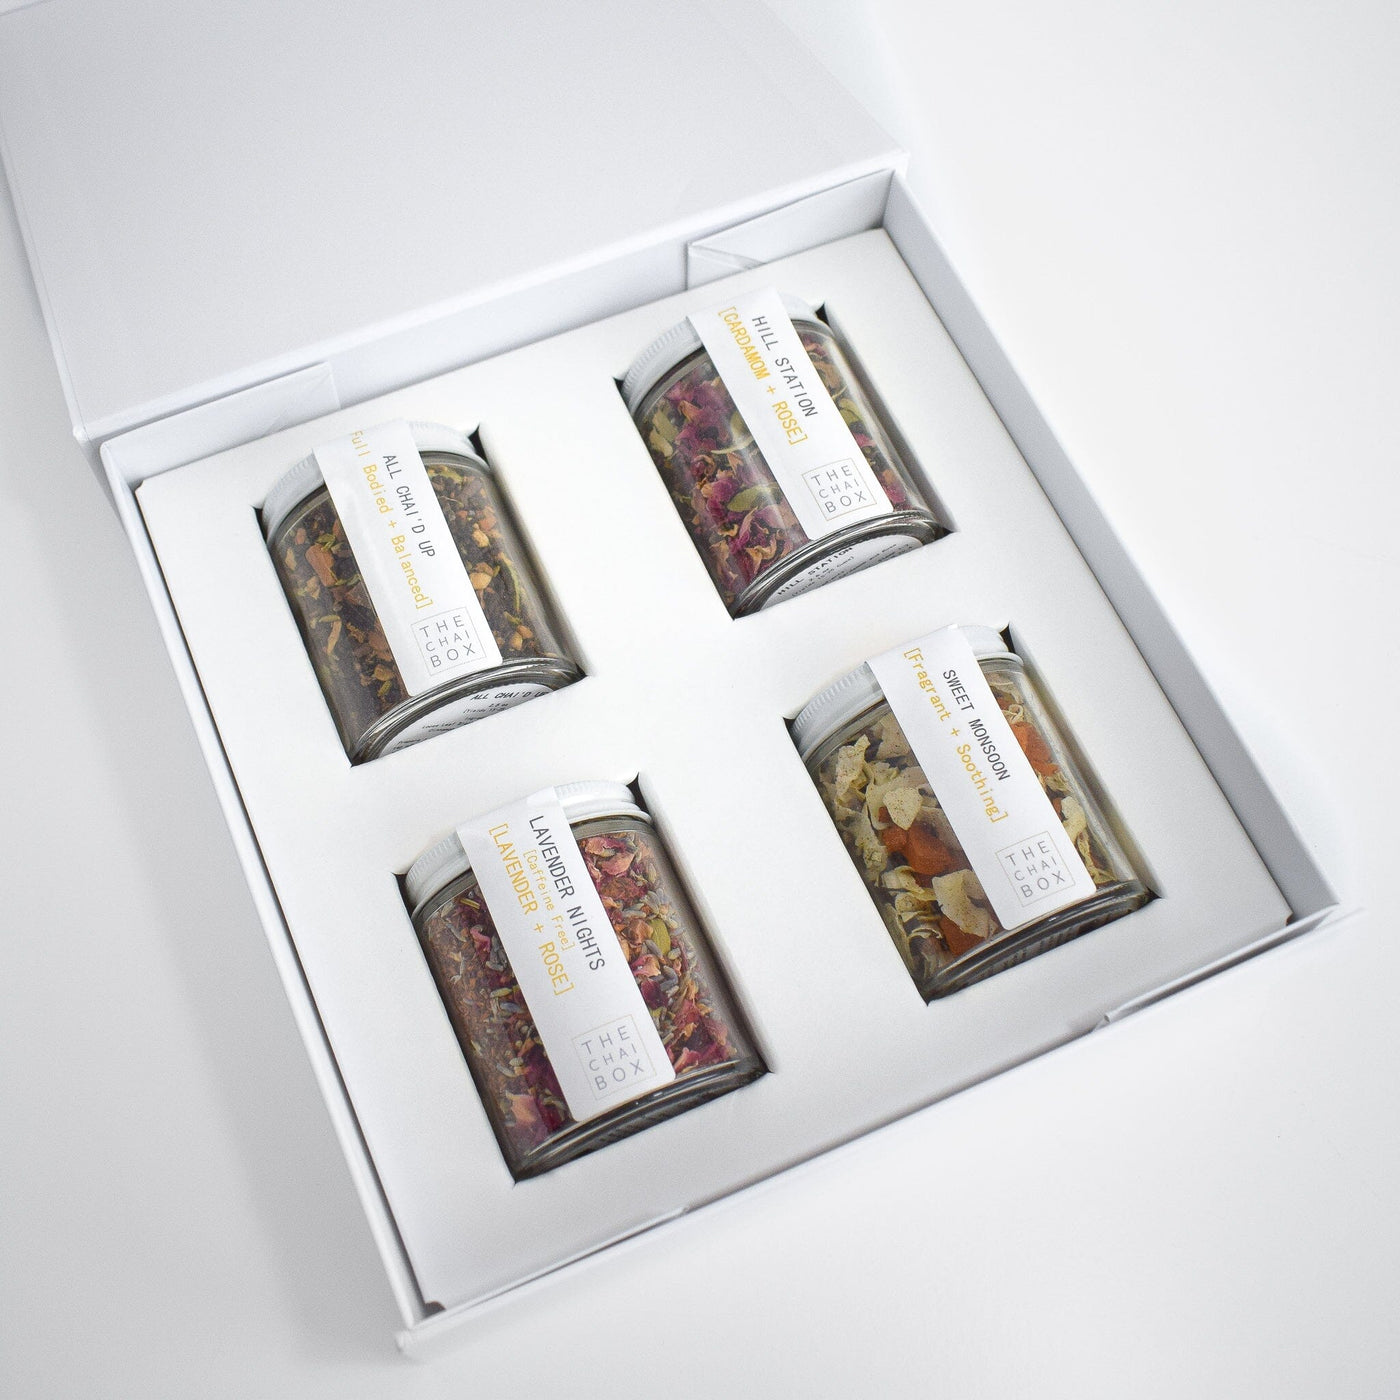 Ultimate Chai Lover's Gift Set Tea The Chai Box 